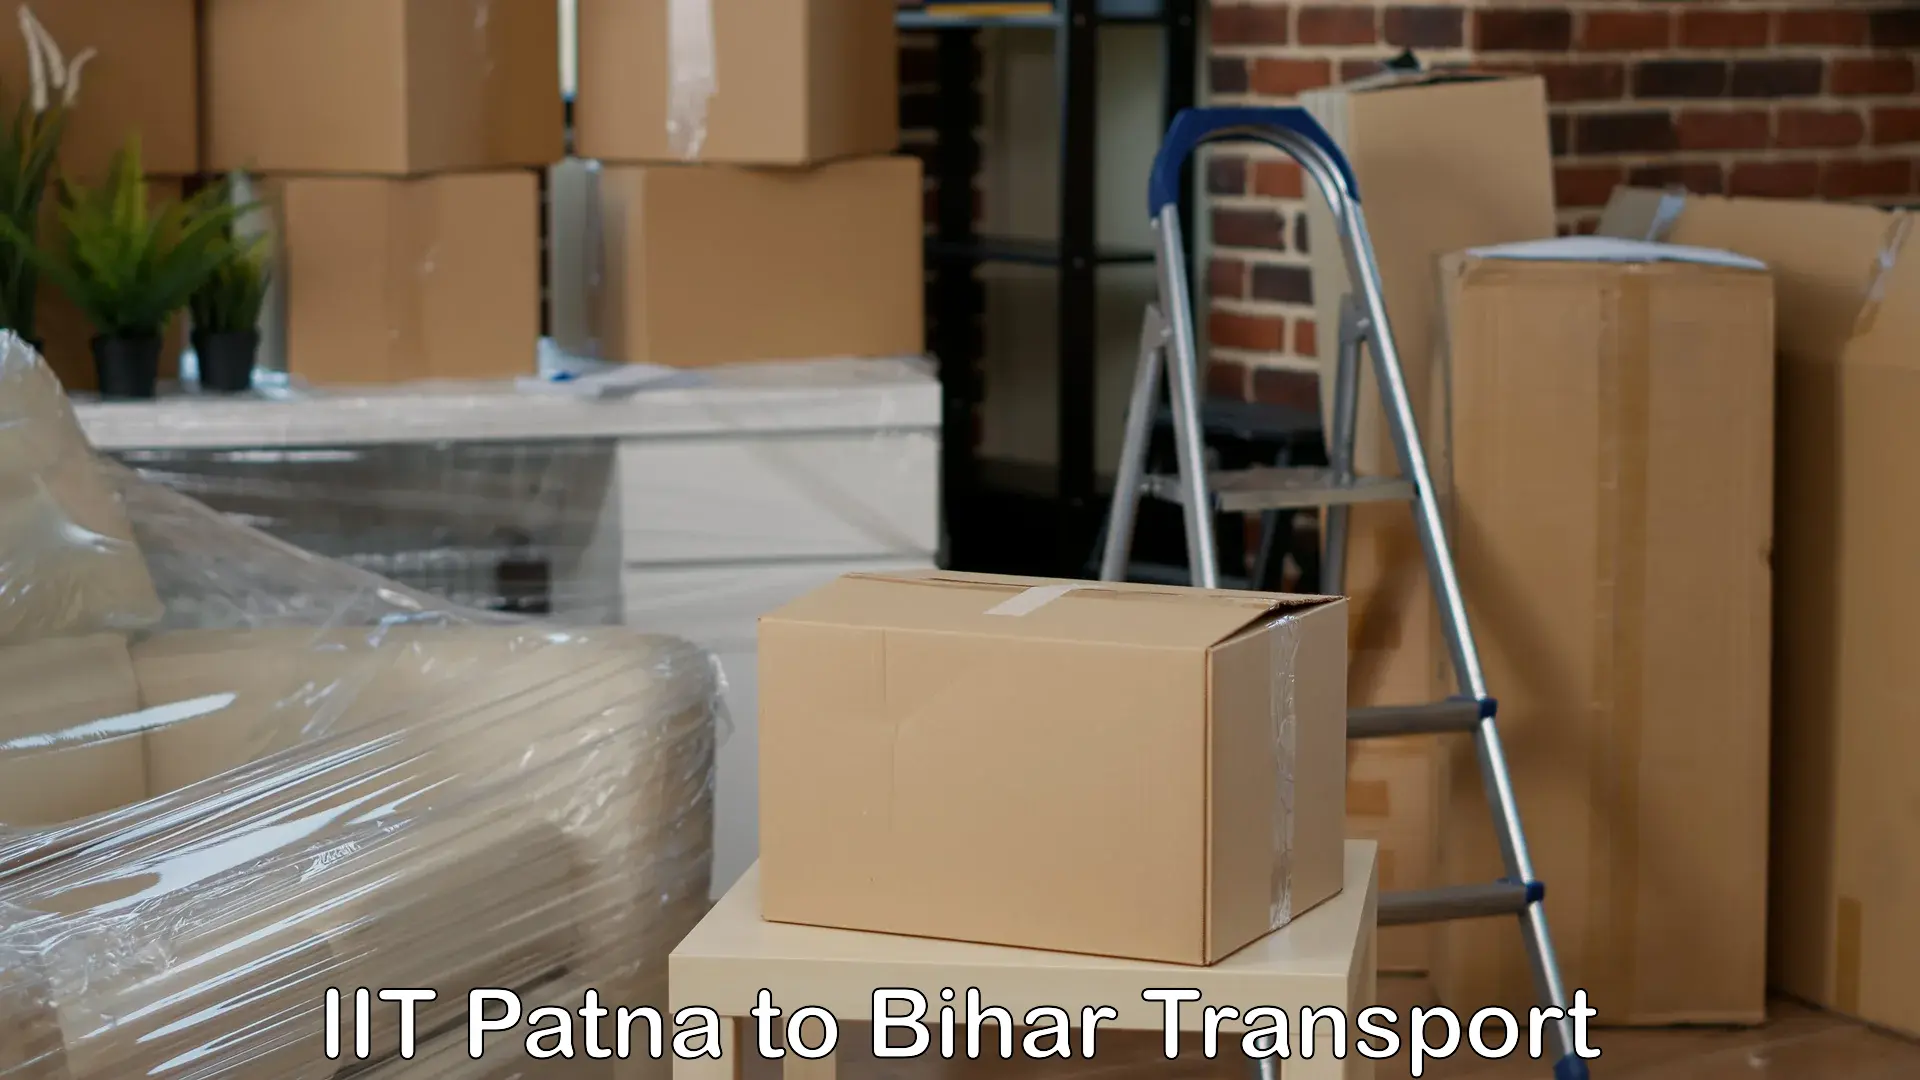 Online transport service IIT Patna to Munger